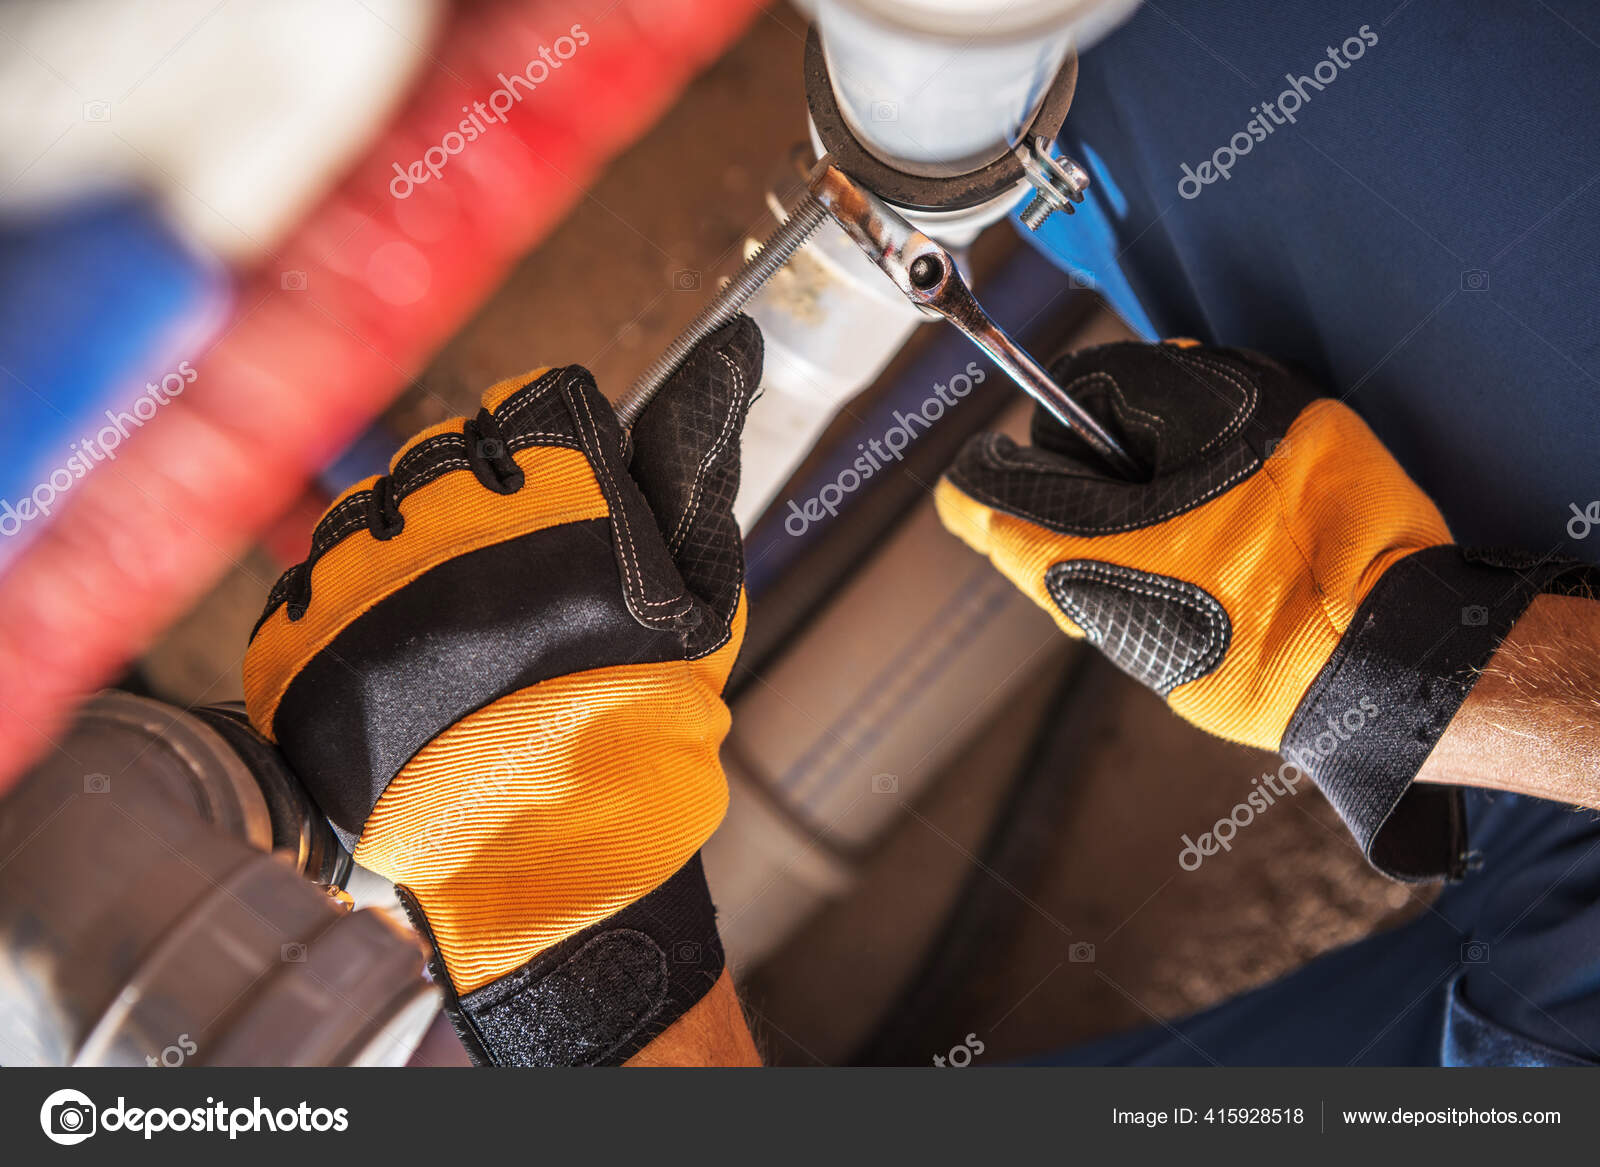 https://st4.depositphotos.com/1203257/41592/i/1600/depositphotos_415928518-stock-photo-caucasian-plumber-worker-wearing-safety.jpg